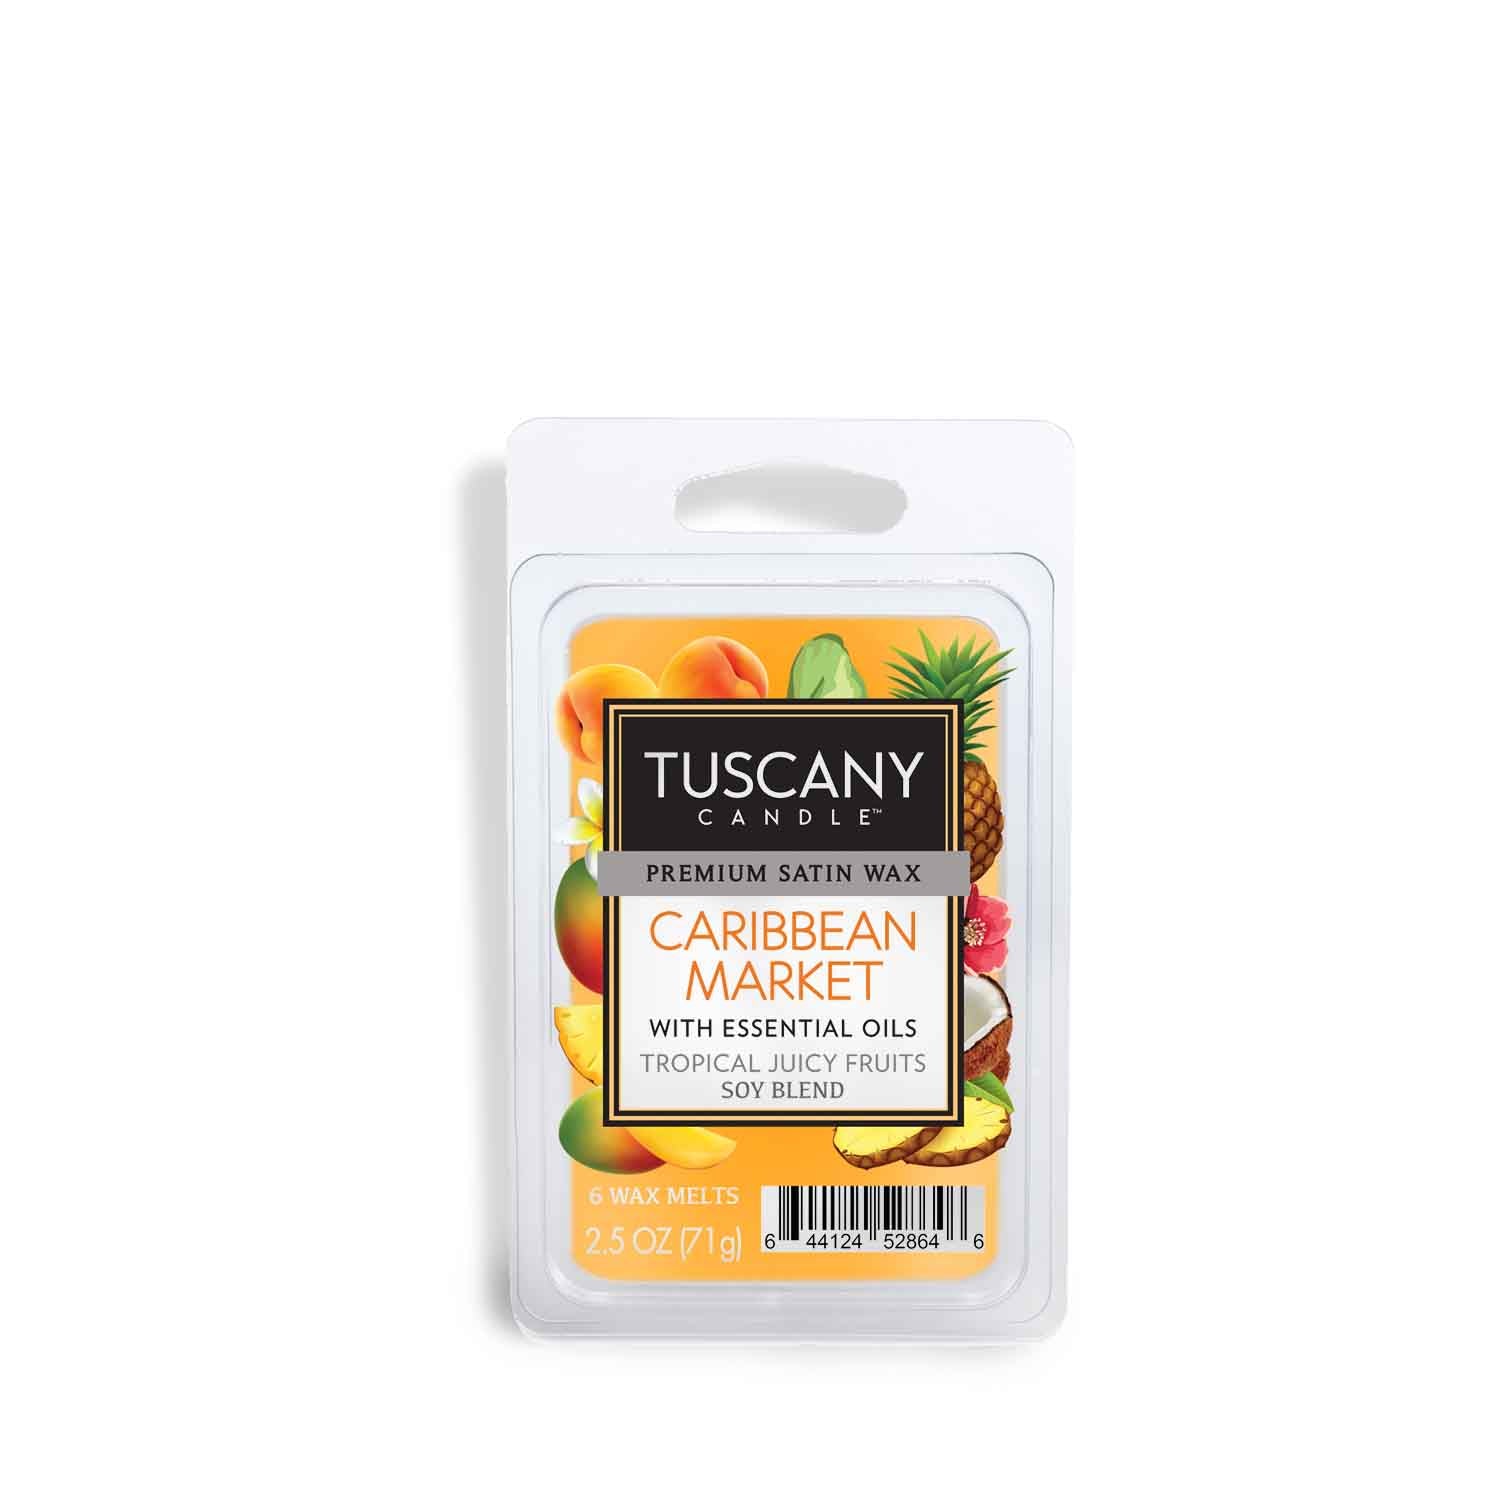 Tuscany Candle Wax Melts, Caribbean Market - 2.5 oz